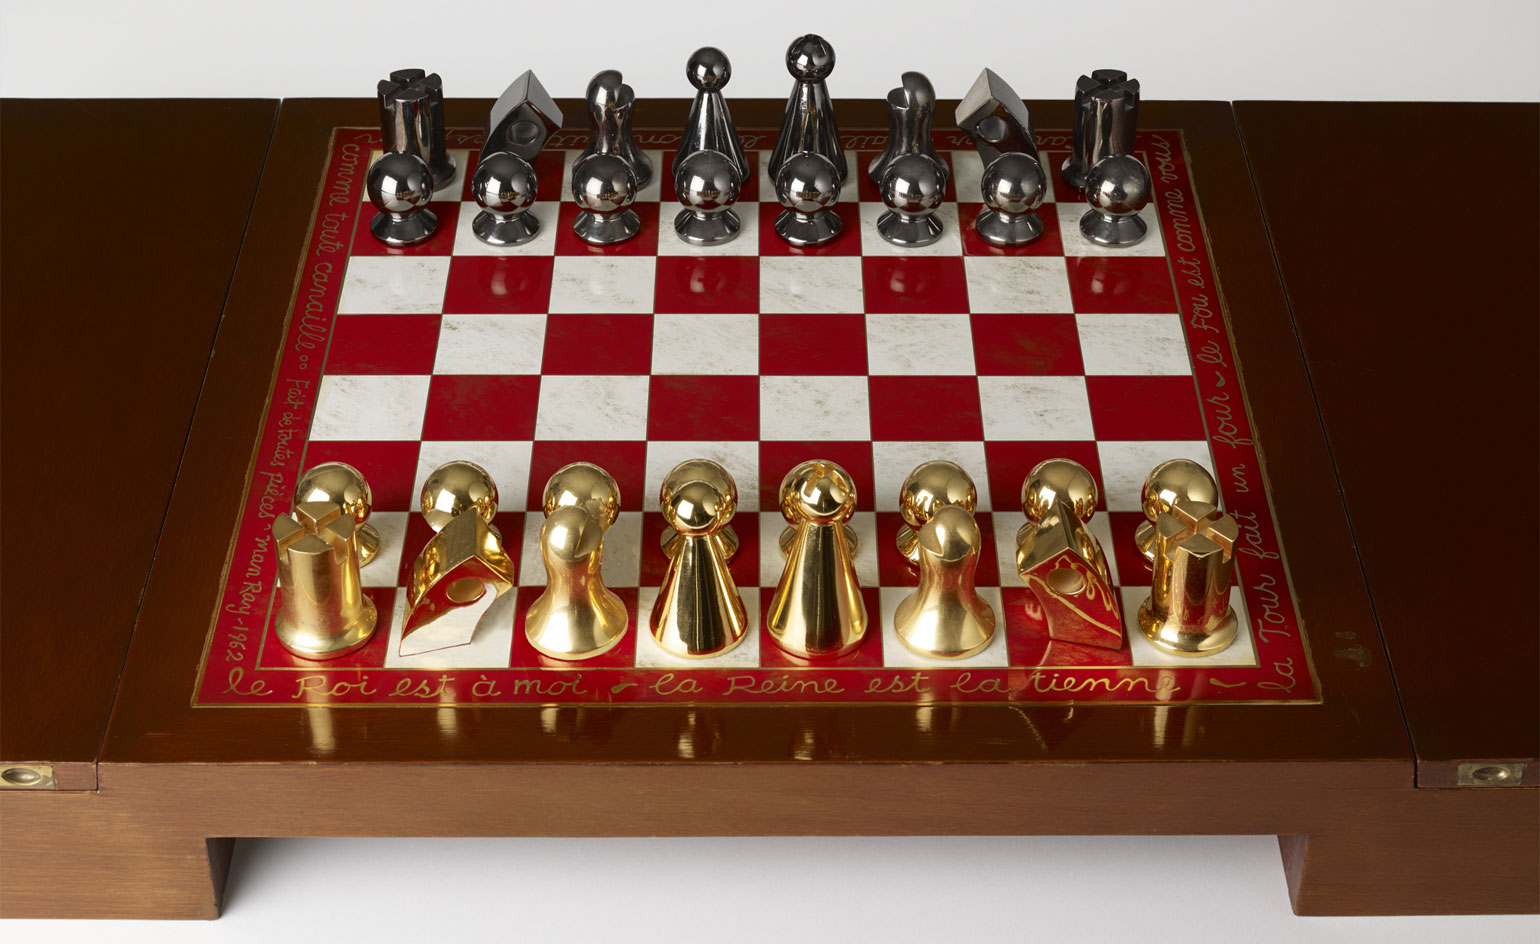 Chess 4 (4 Player Chess) – Fancy Chess